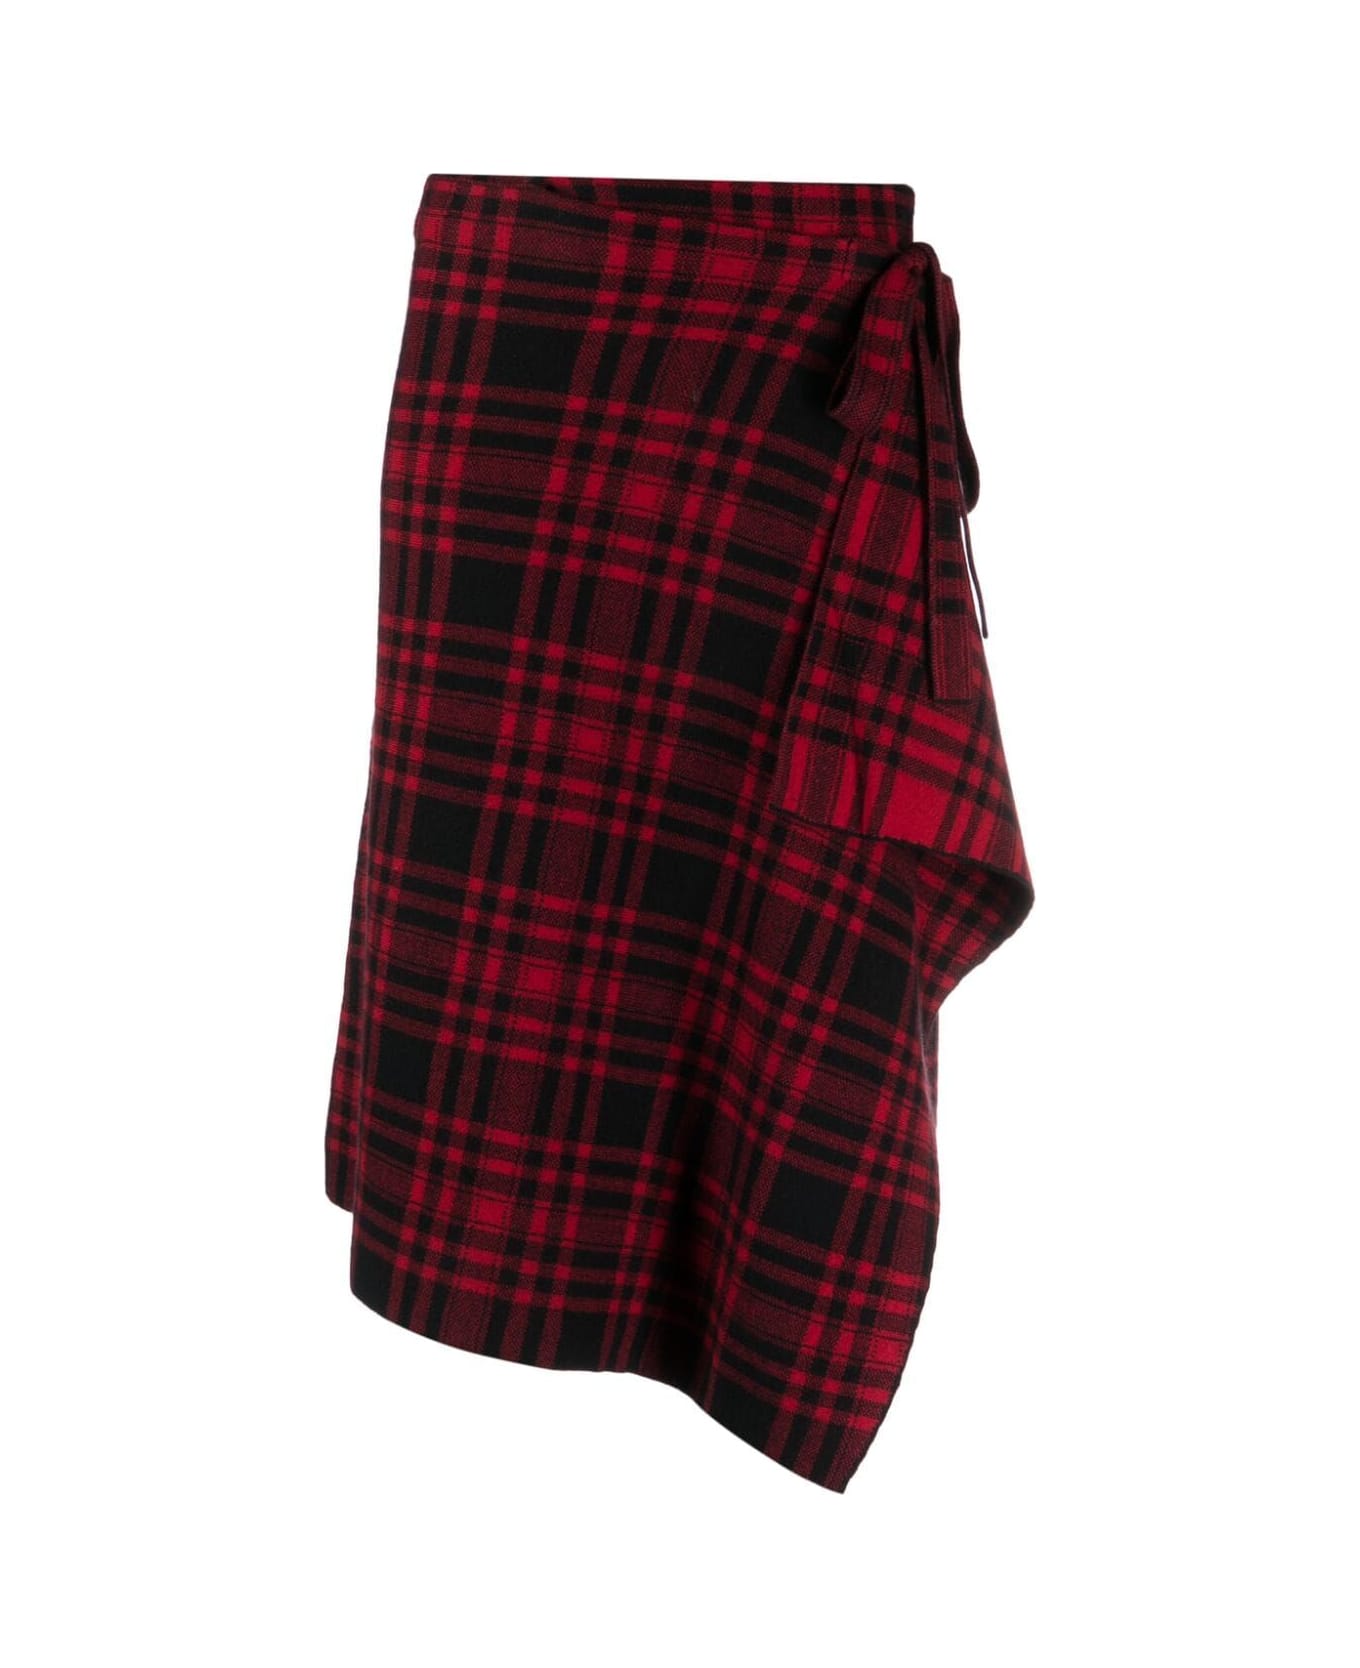 Polo Ralph Lauren Mid A Line Skirt - Red Black Plaid